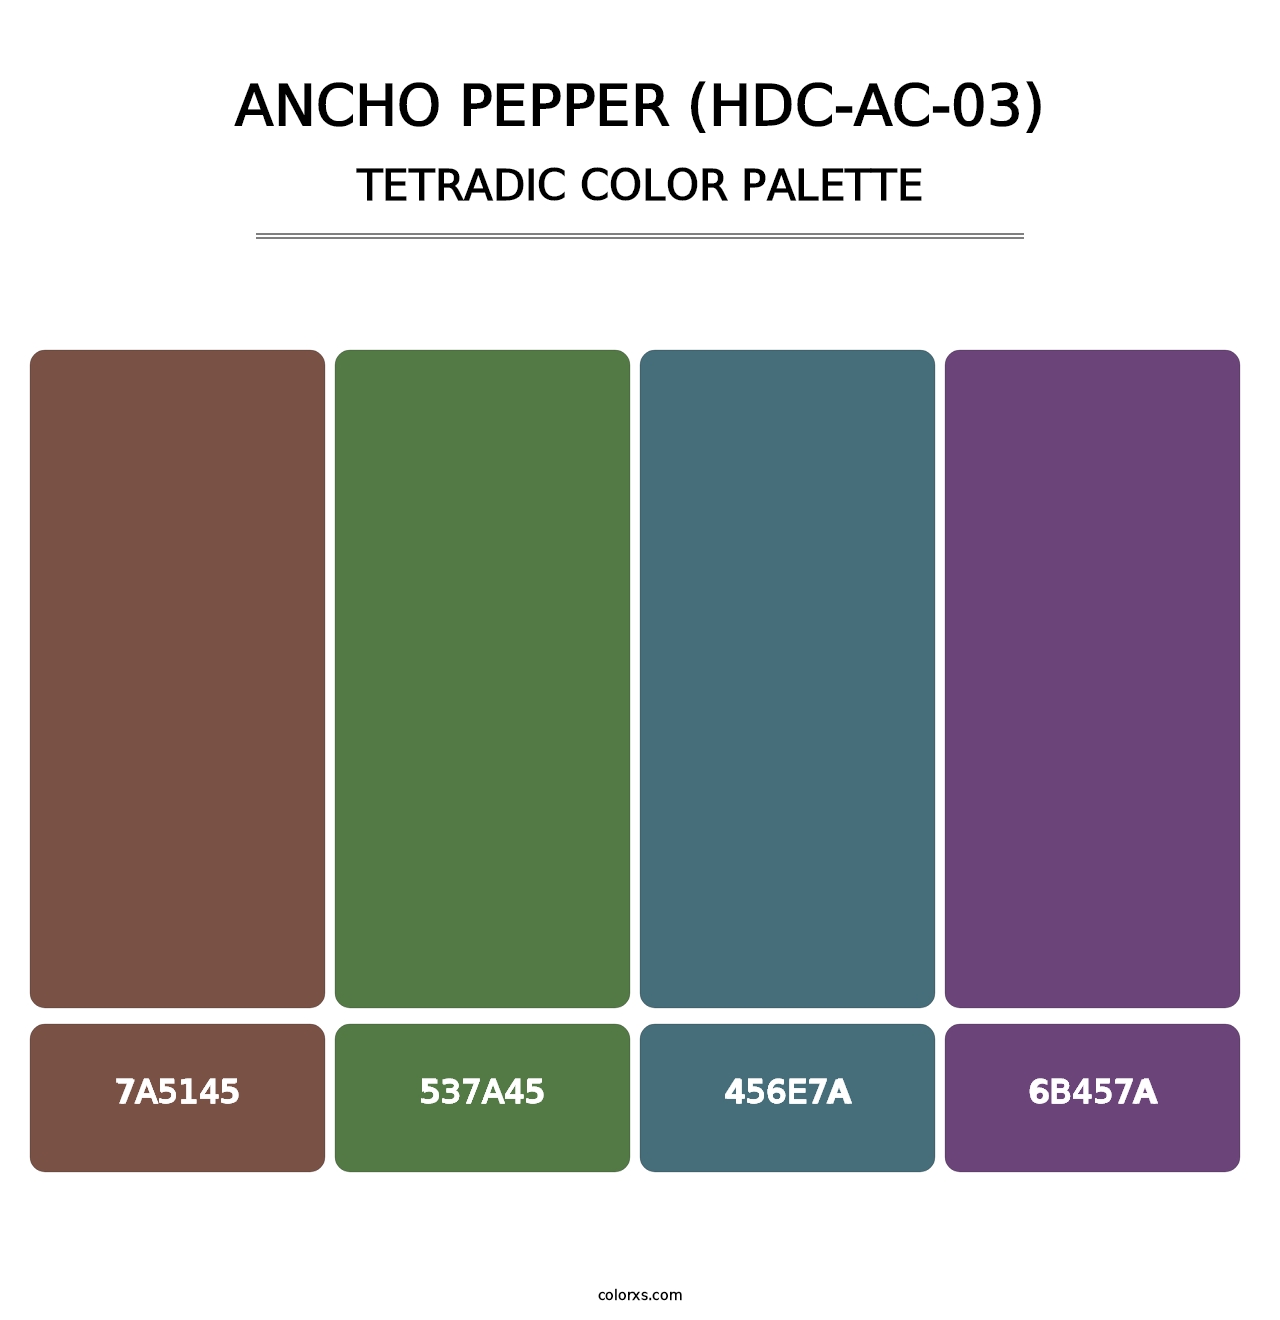 Ancho Pepper (HDC-AC-03) - Tetradic Color Palette